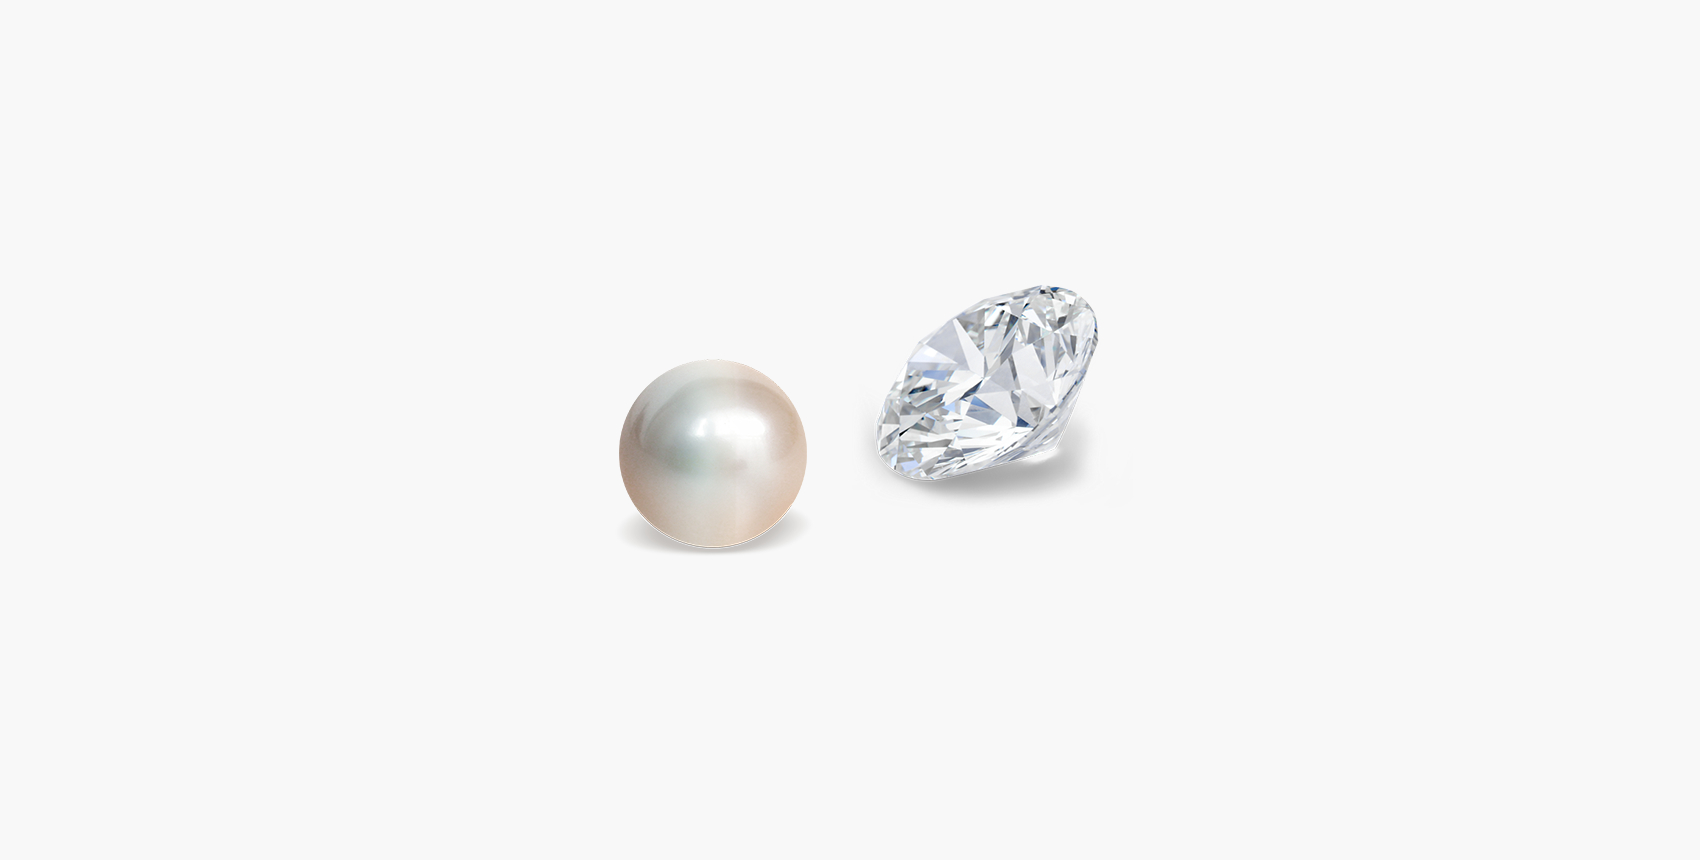 Anillos de compromiso con perla vs. diamante | Nile MX